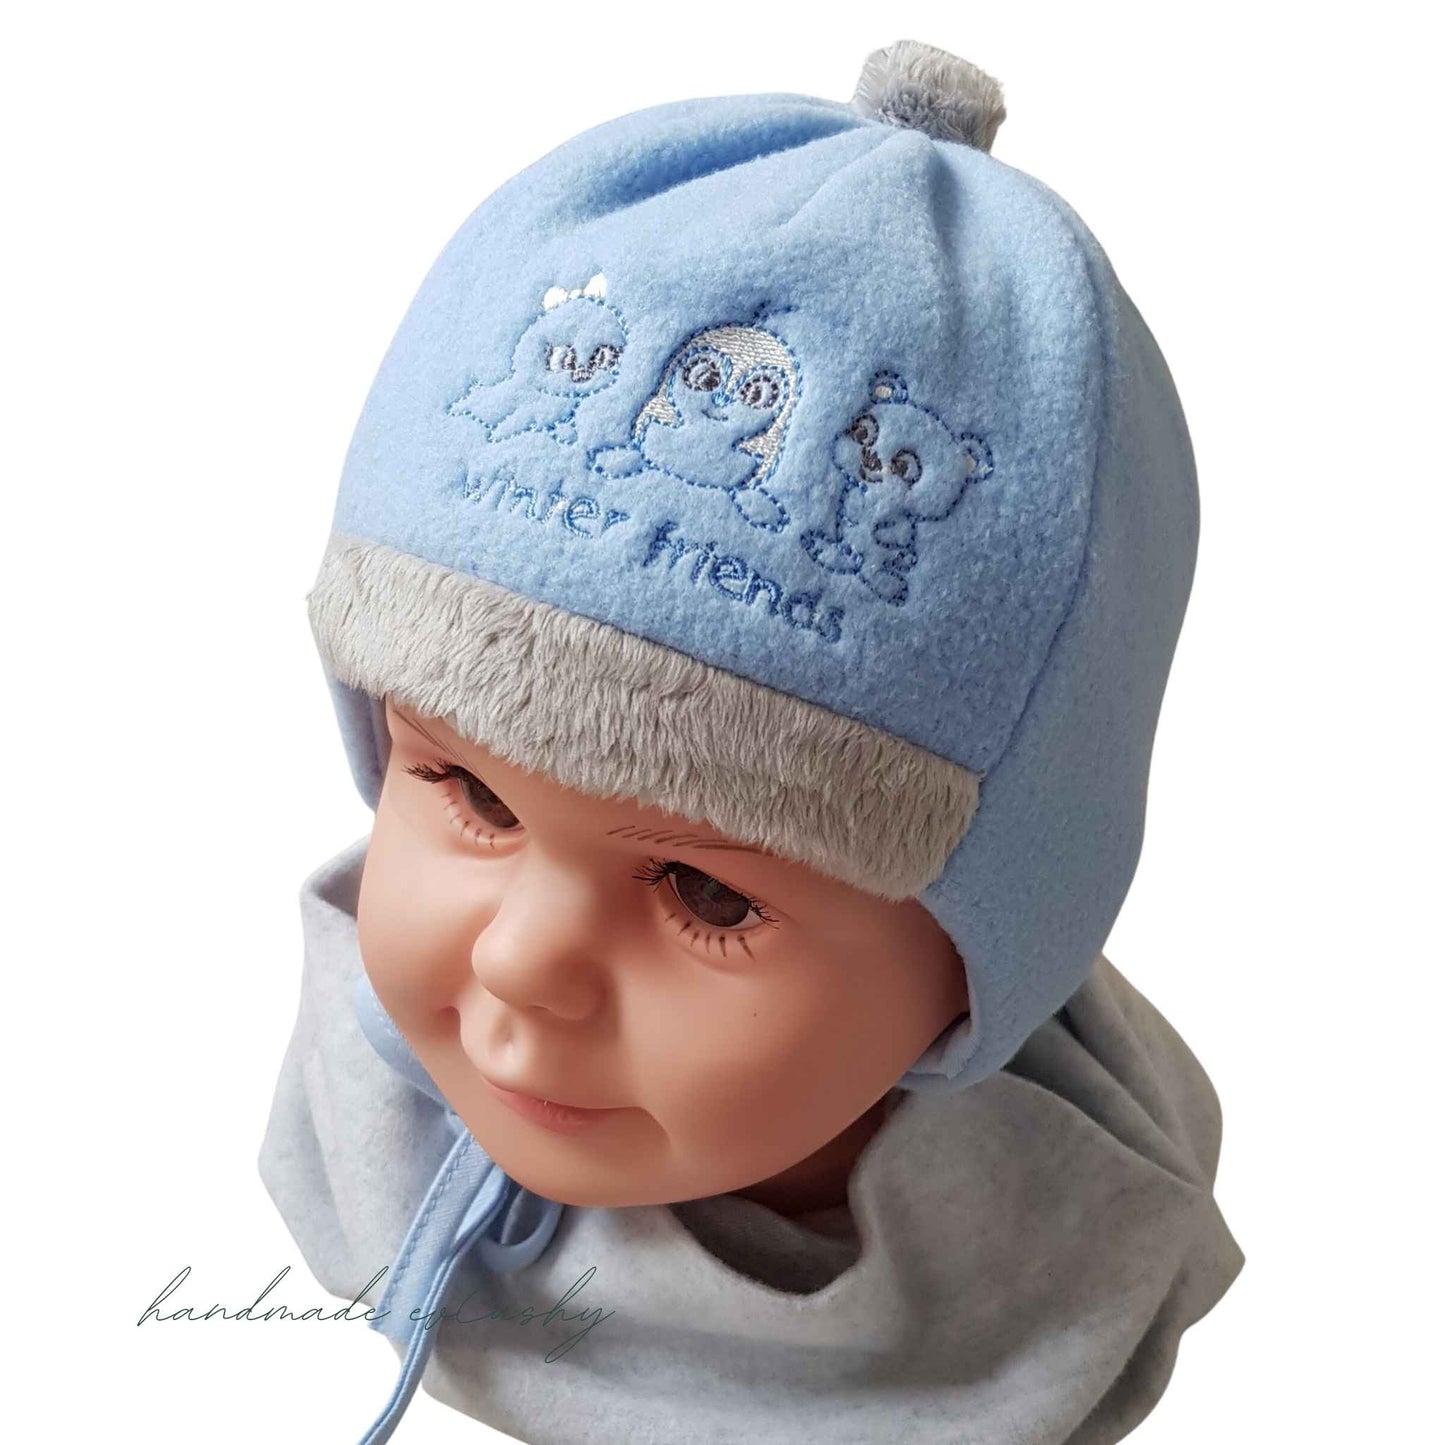 polar hat for baby boy winter hat warm with padding grey rim